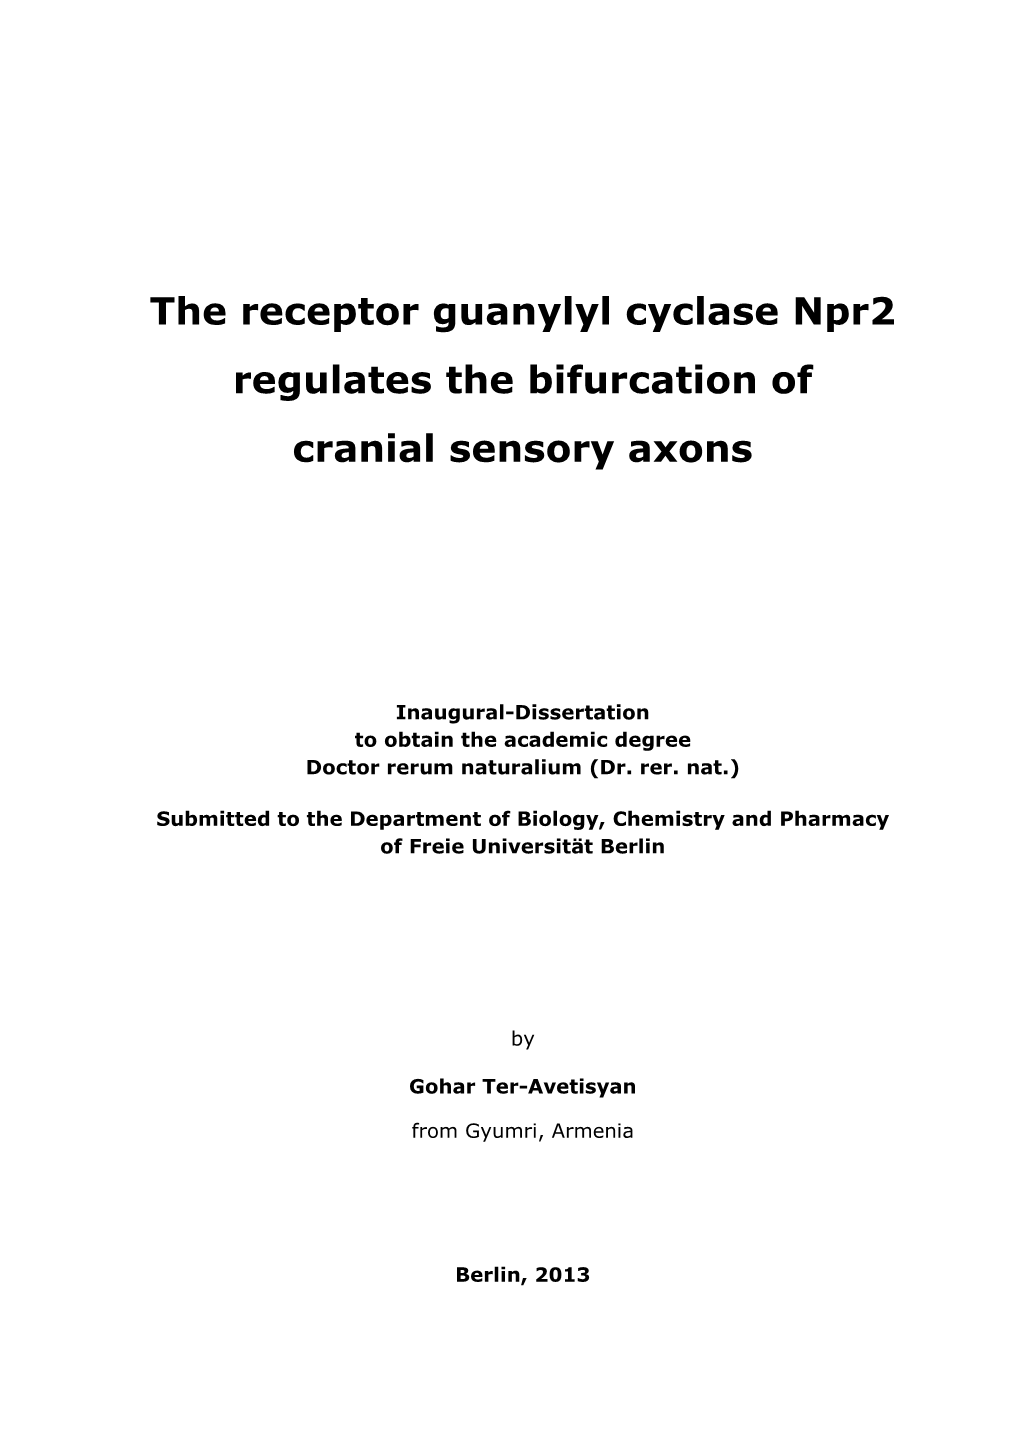 The Receptor Guanylyl Cyclase Npr2 Regulates the Bifurcation of Cranial Sensory Axons